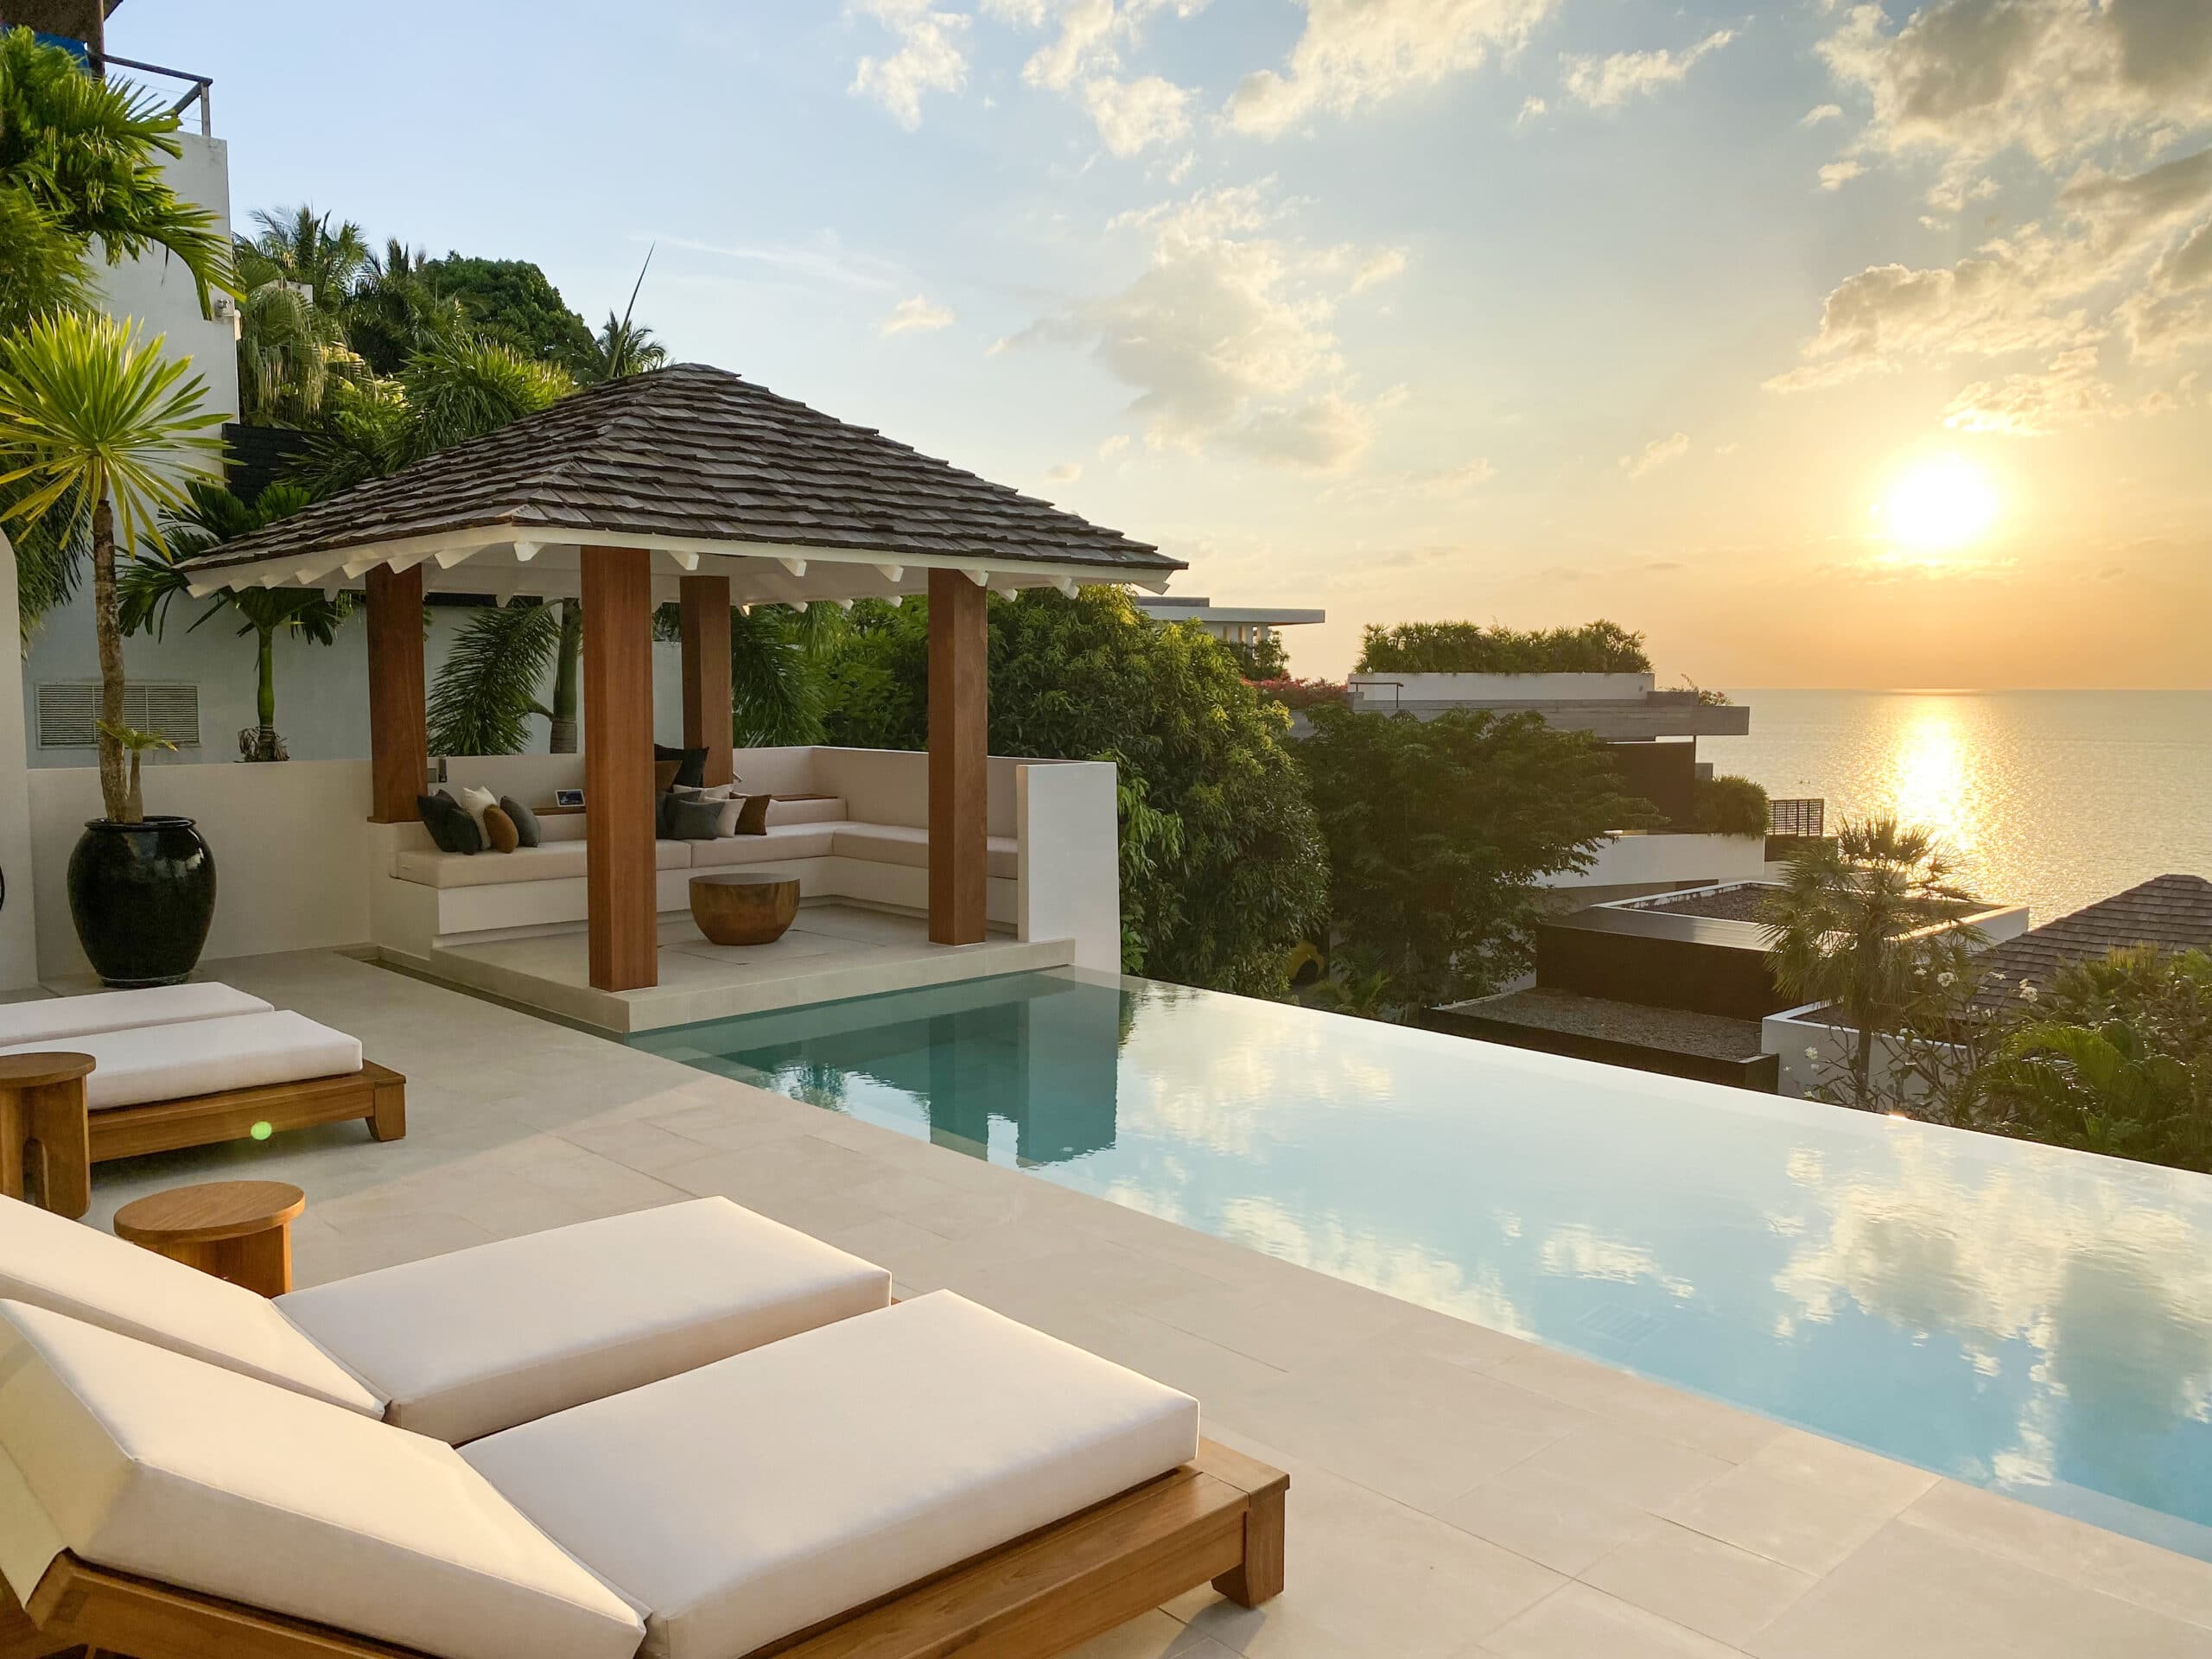 Design Assembly - Surin Villa Phuket - Bali Architect - Interior Design - Villa - Swimming Pool